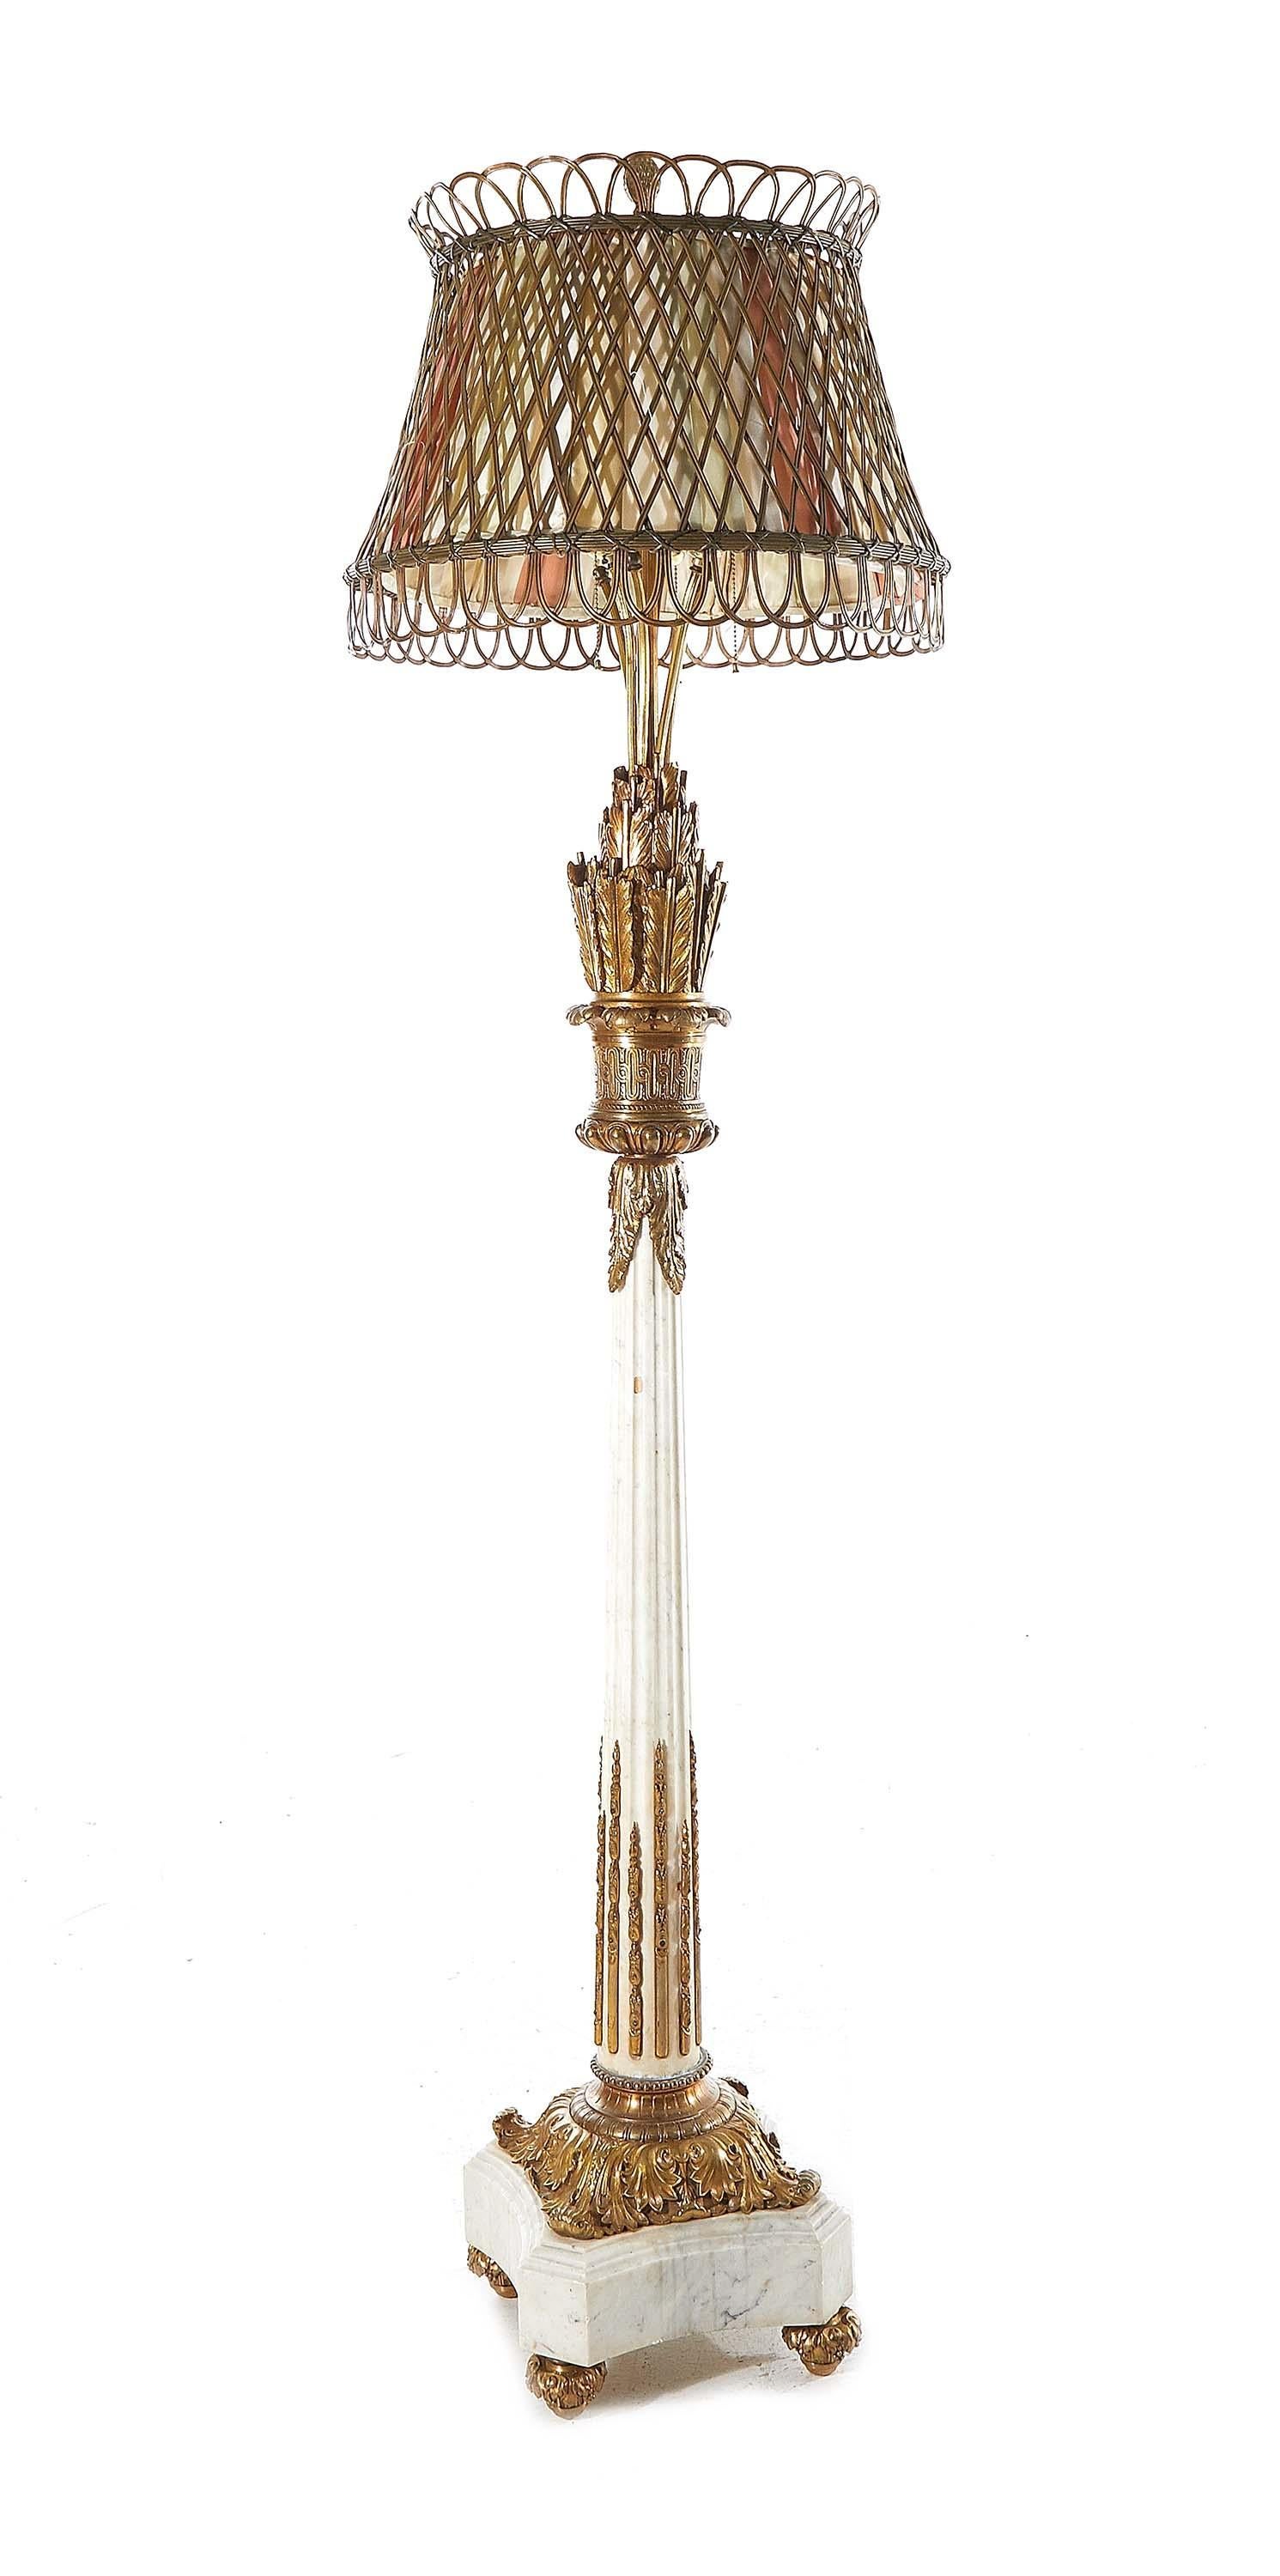 Impressive Louis XVI Style Gilt-Bronze and Marble Floor Lamp For Sale 4